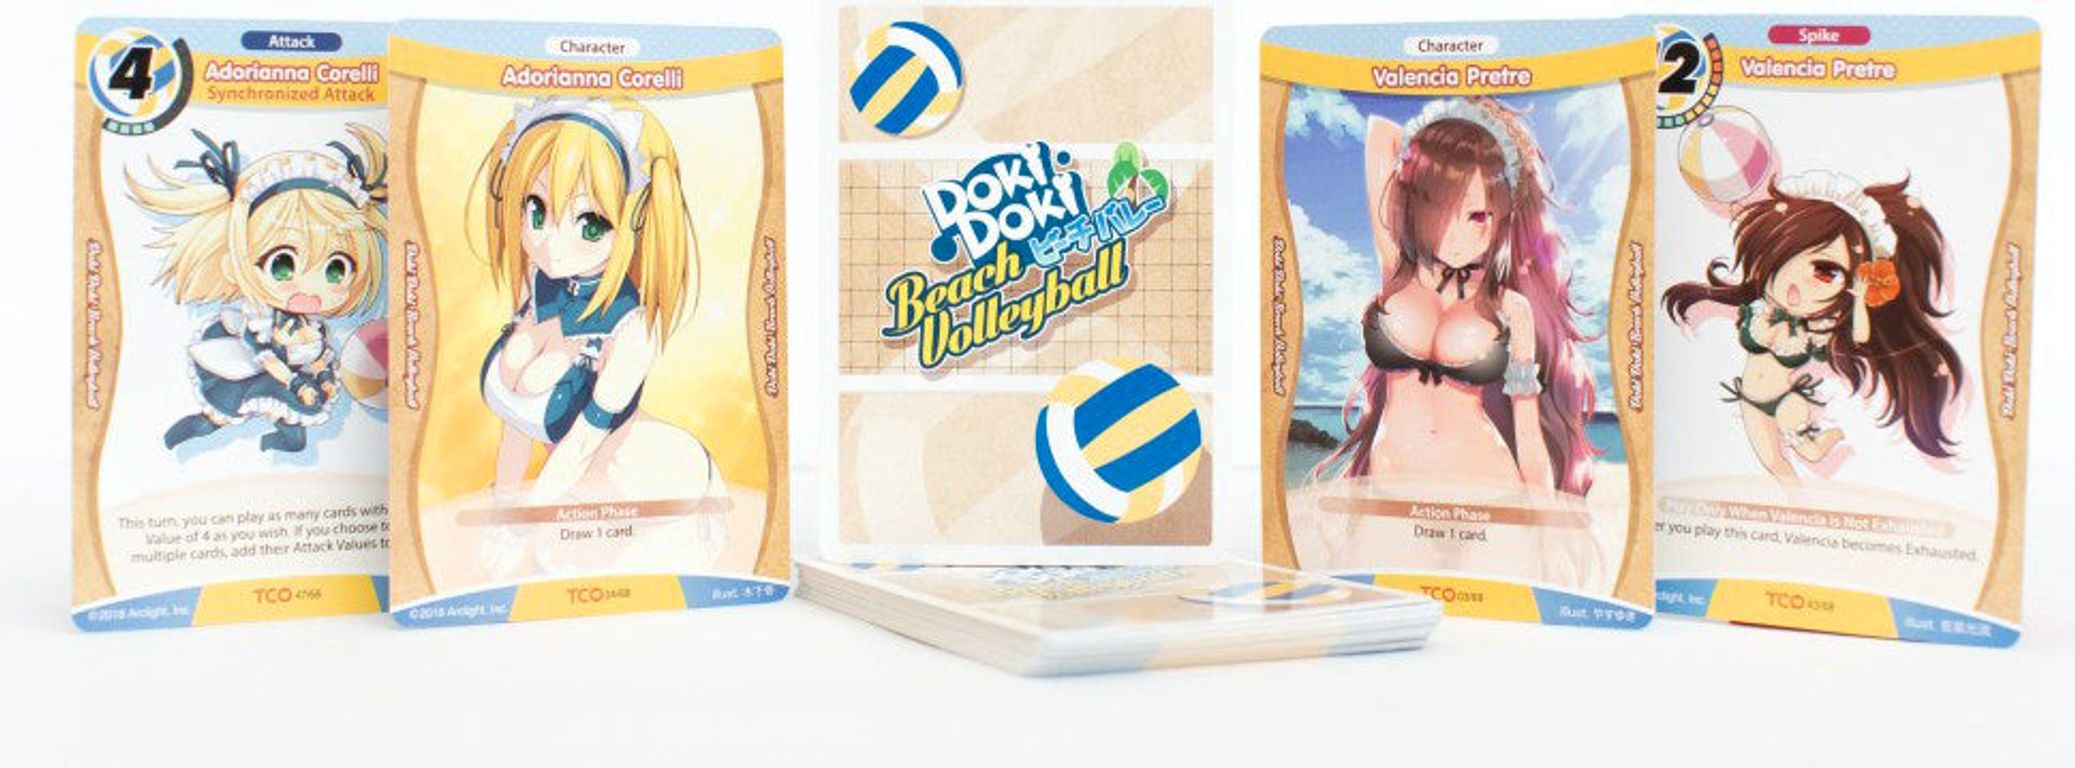 Tanto Cuore: Doki Doki Beach Volleyball cards